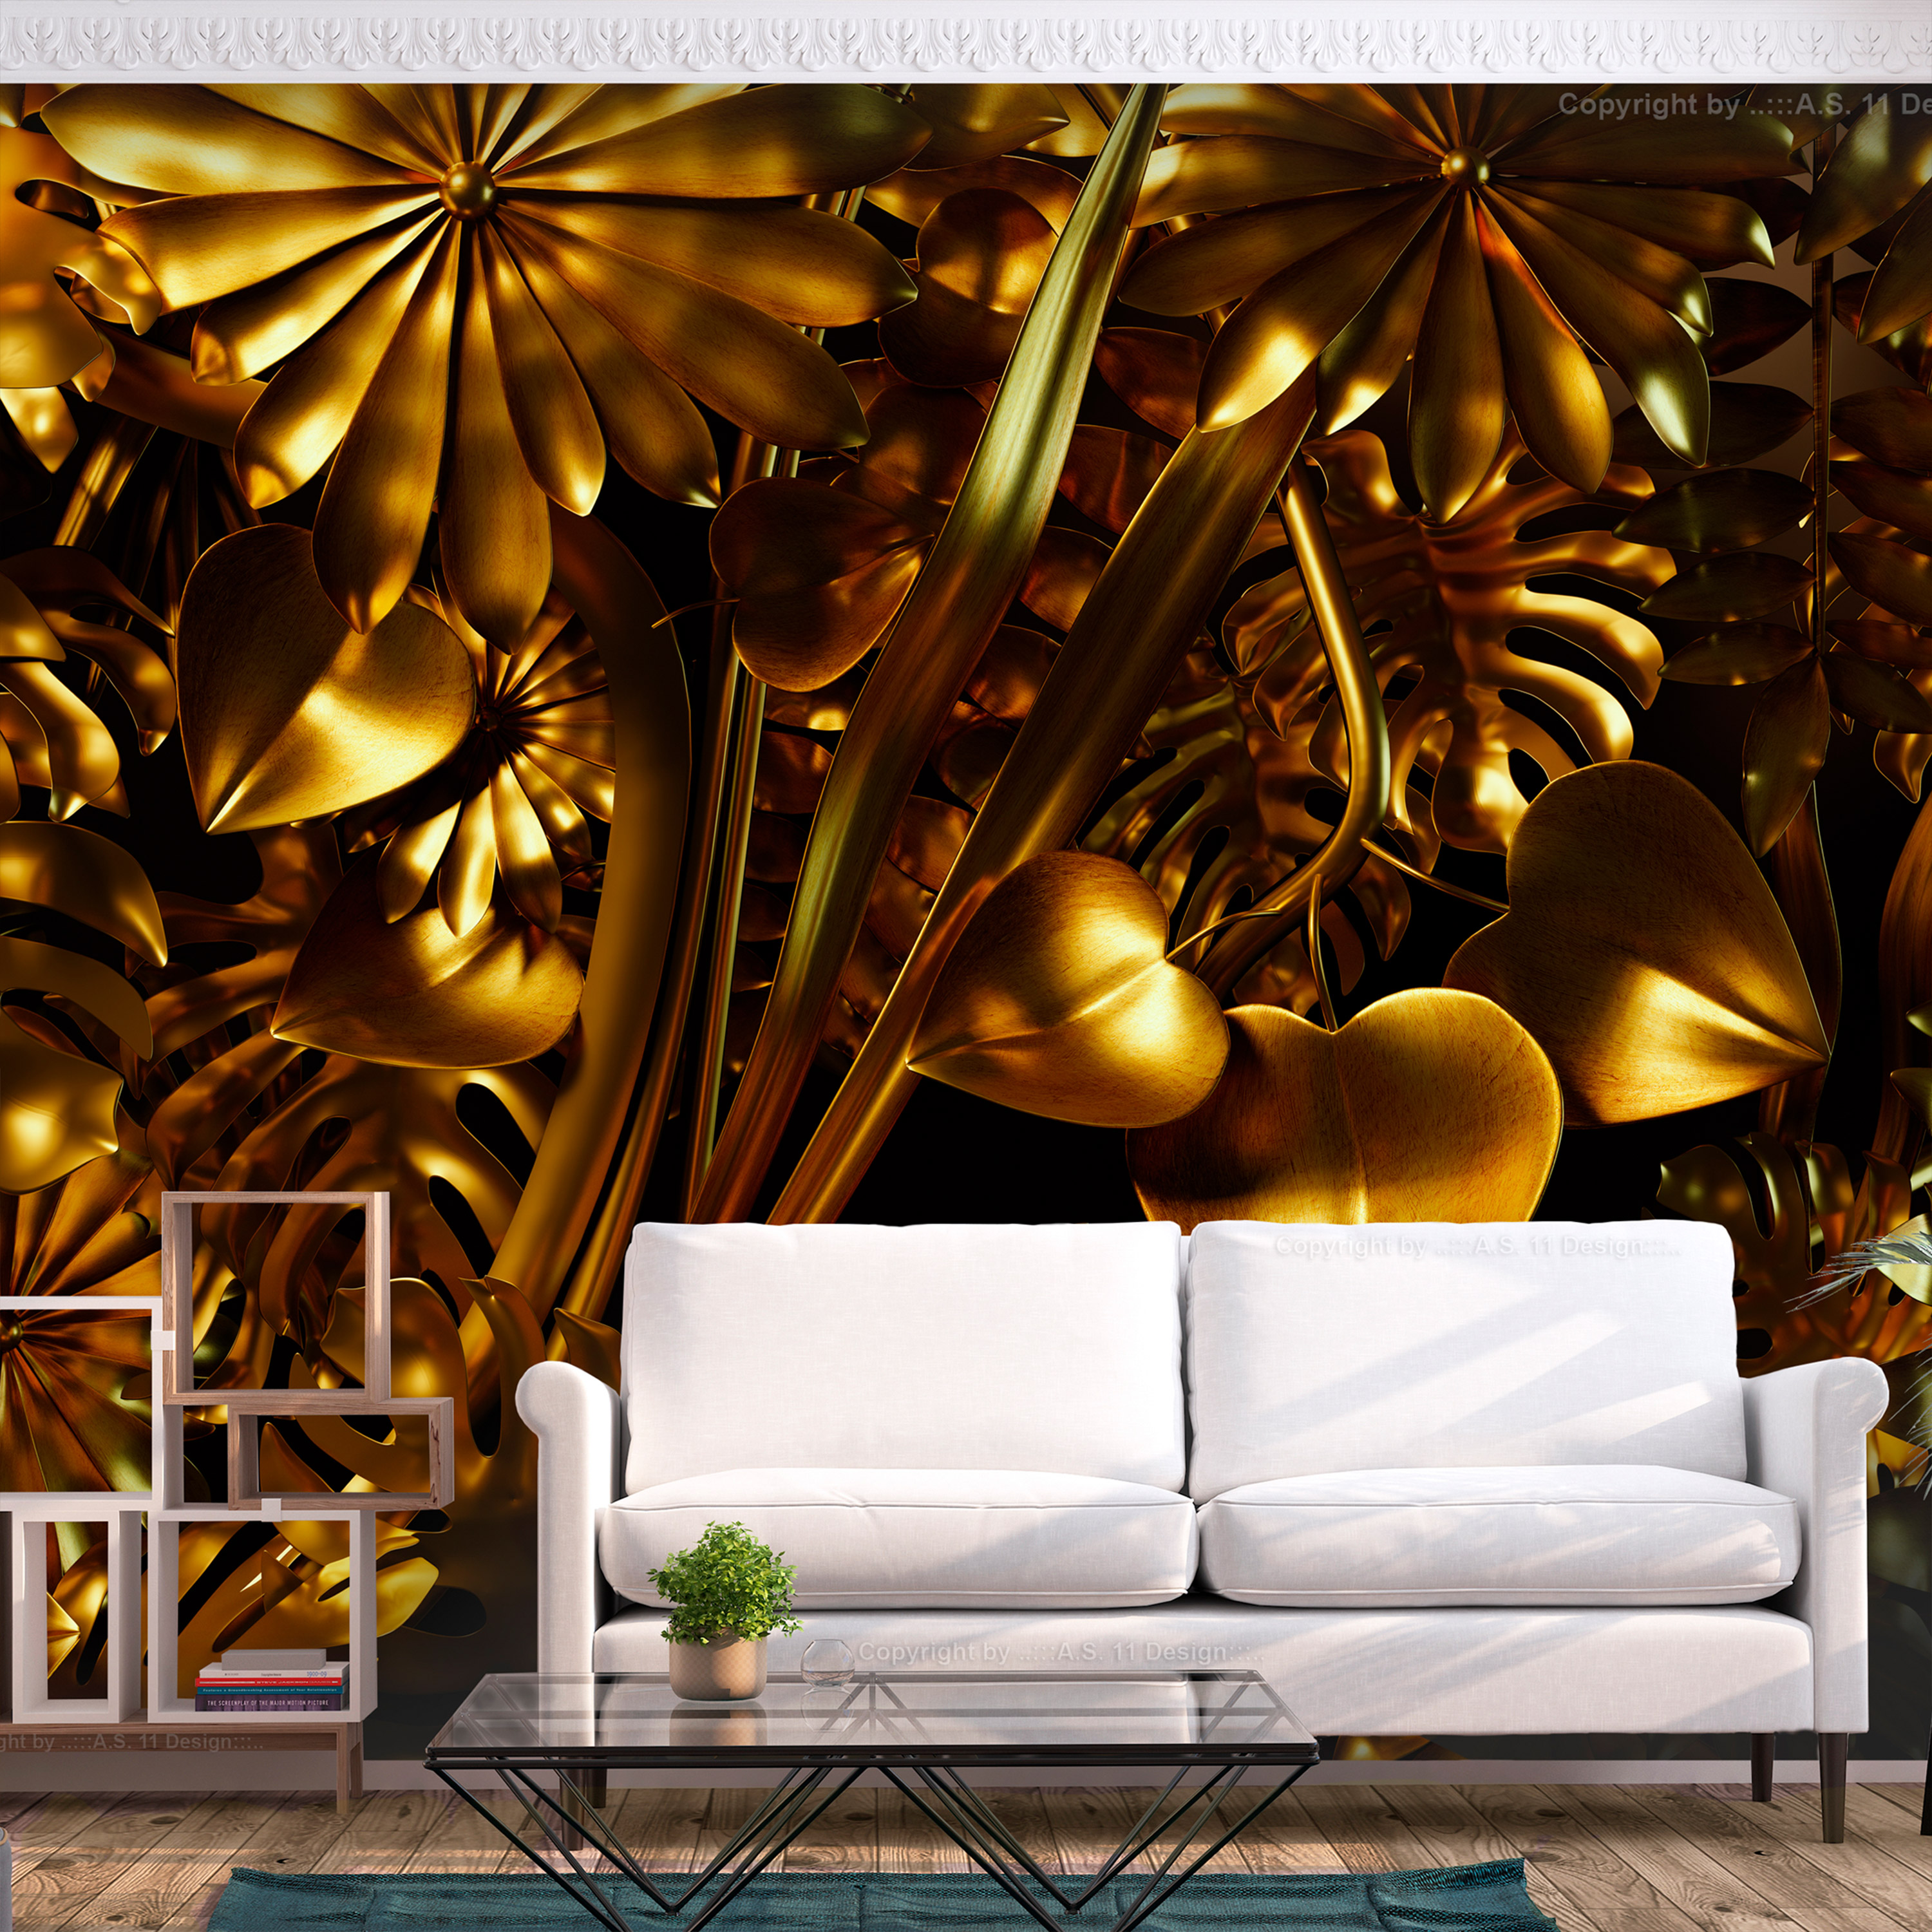 Self-adhesive Wallpaper - Golden Jungle - 98x70